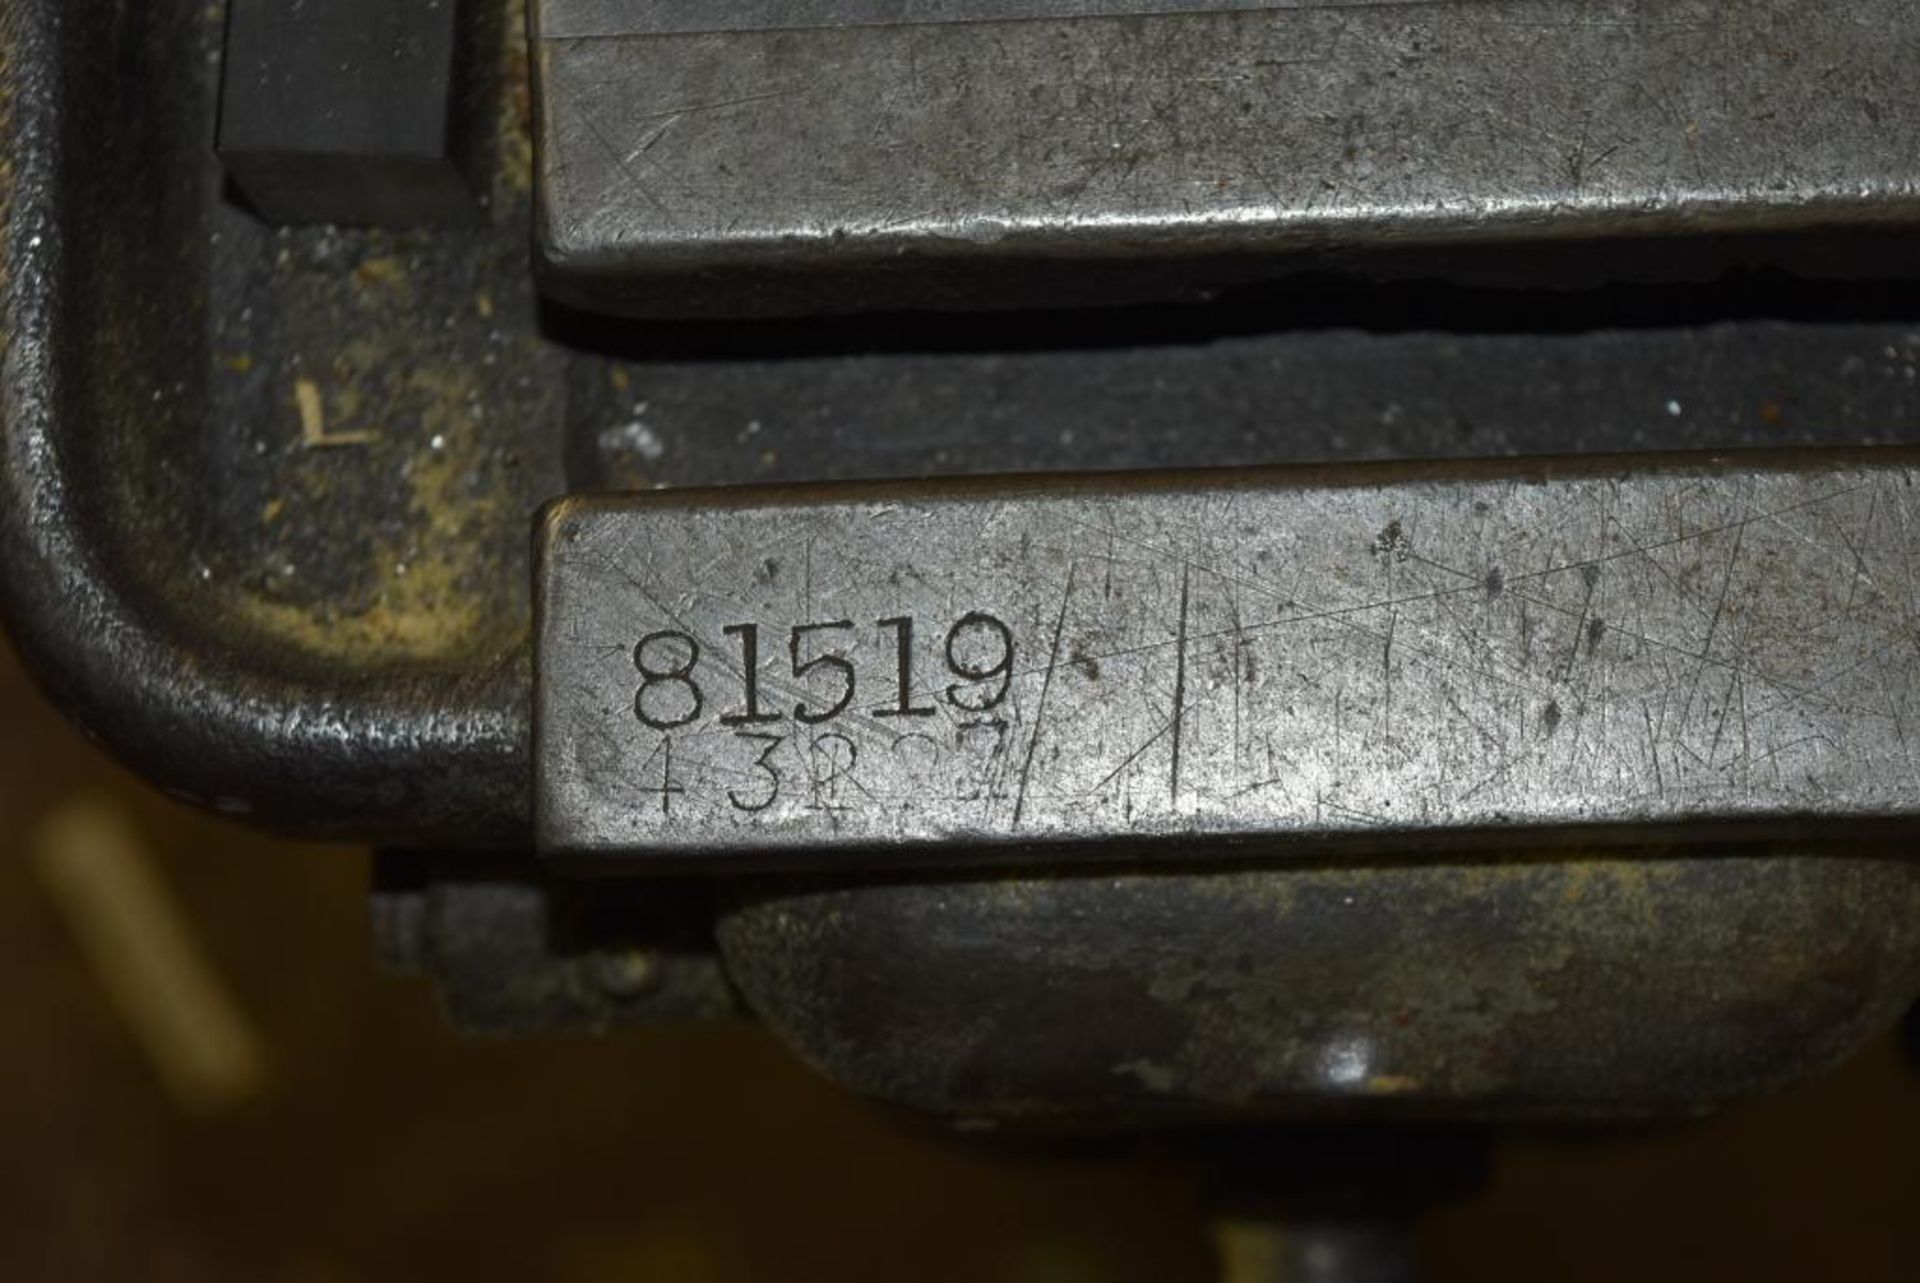 Armstrong Marvel 18" No. 8 Vertical Bandsaw S/N 81519, 45-Degree Tilting Head, 1-HP Motor Drive, Bel - Image 5 of 6